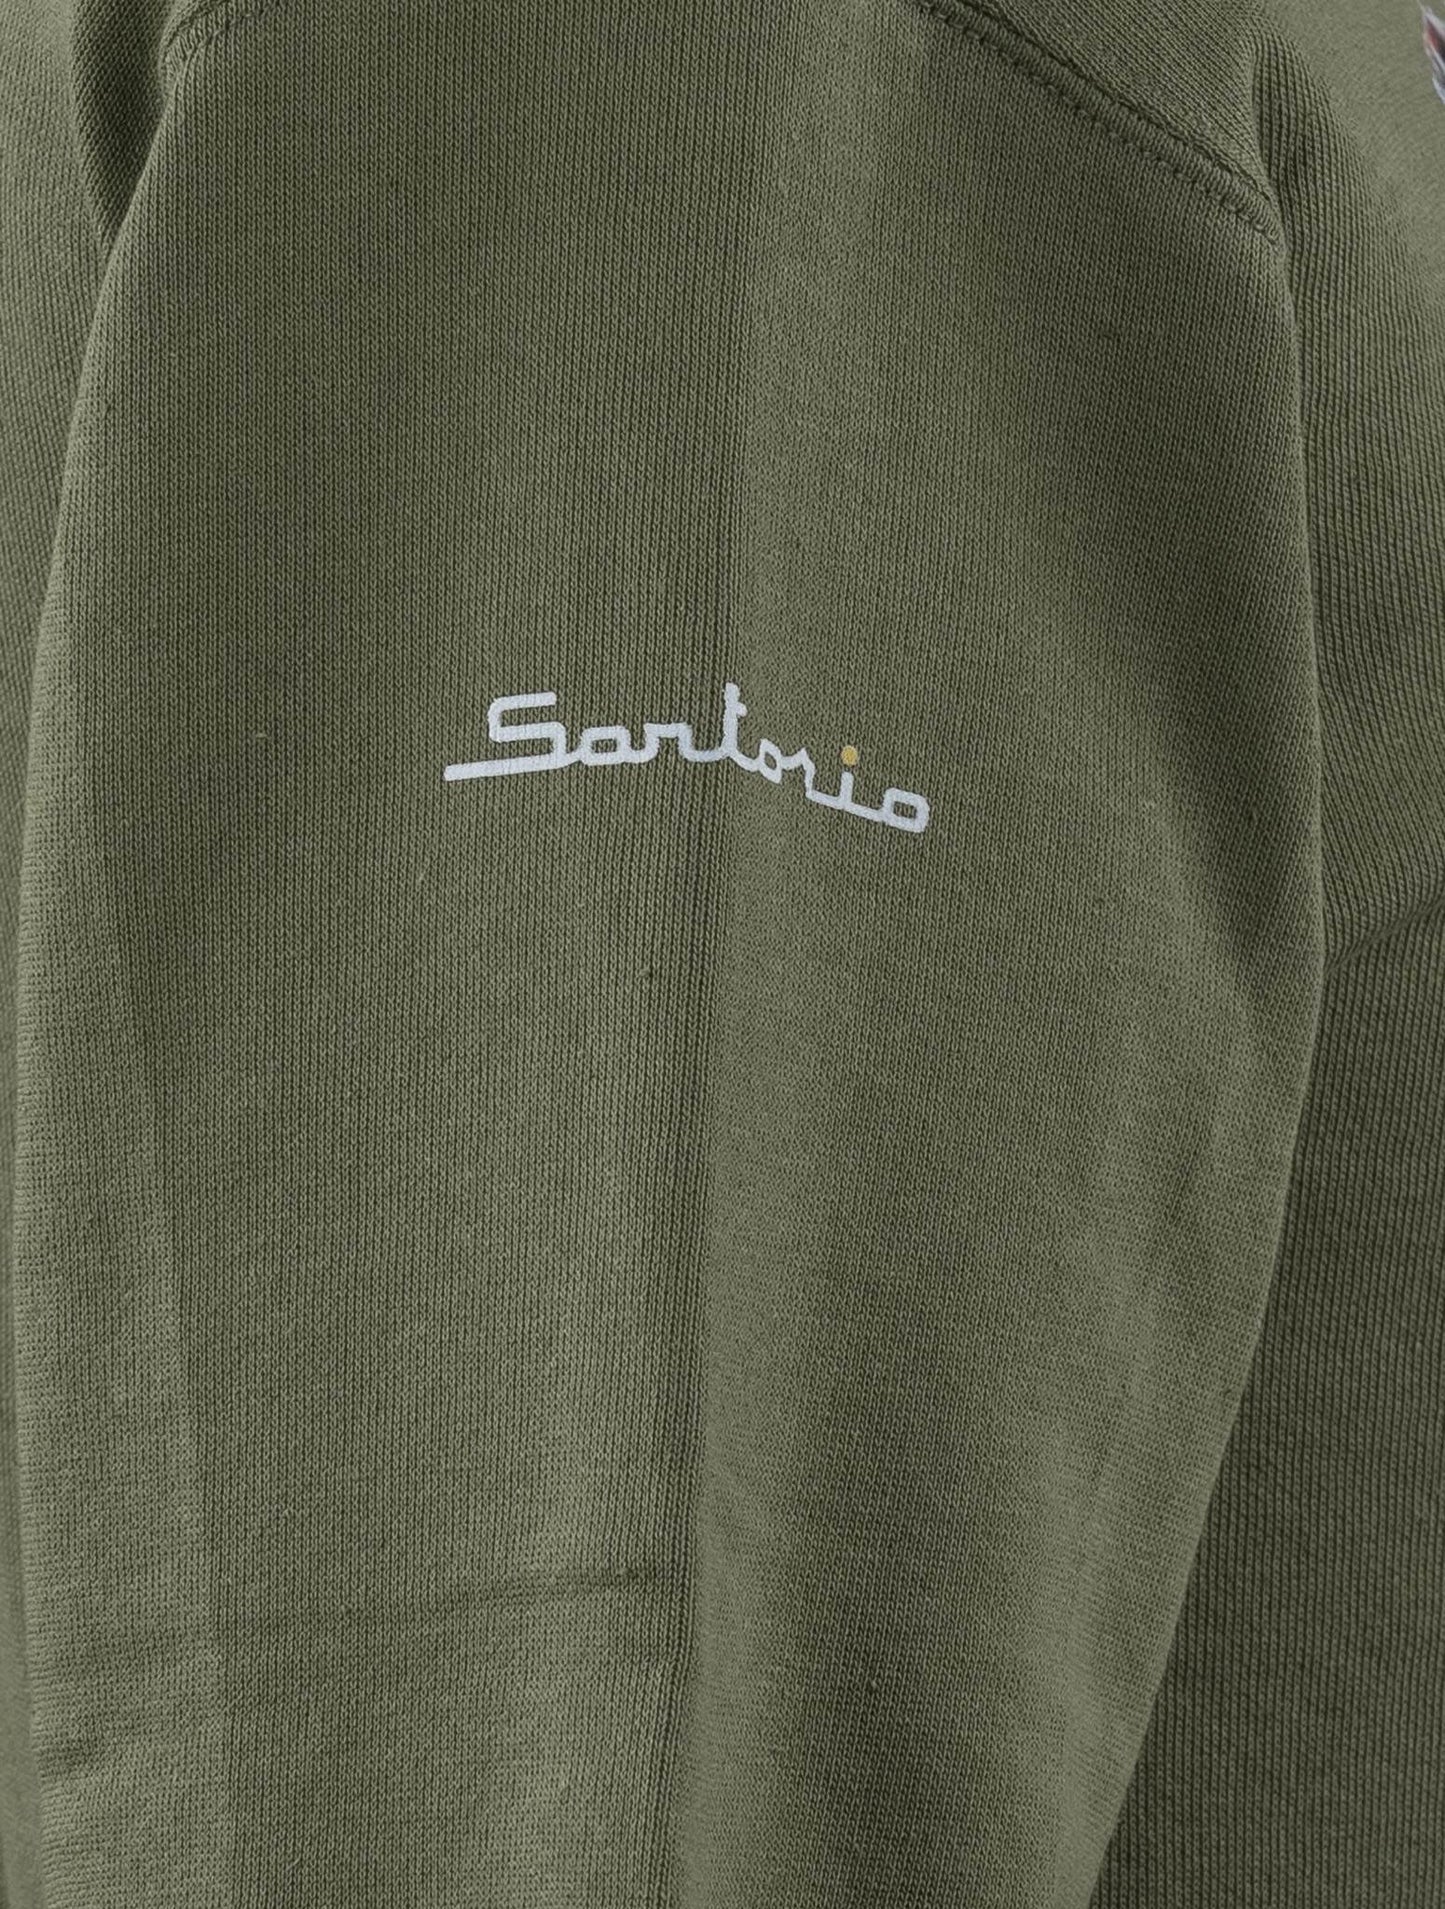 Sartorio Napoli groene katoenen trui speciale editie